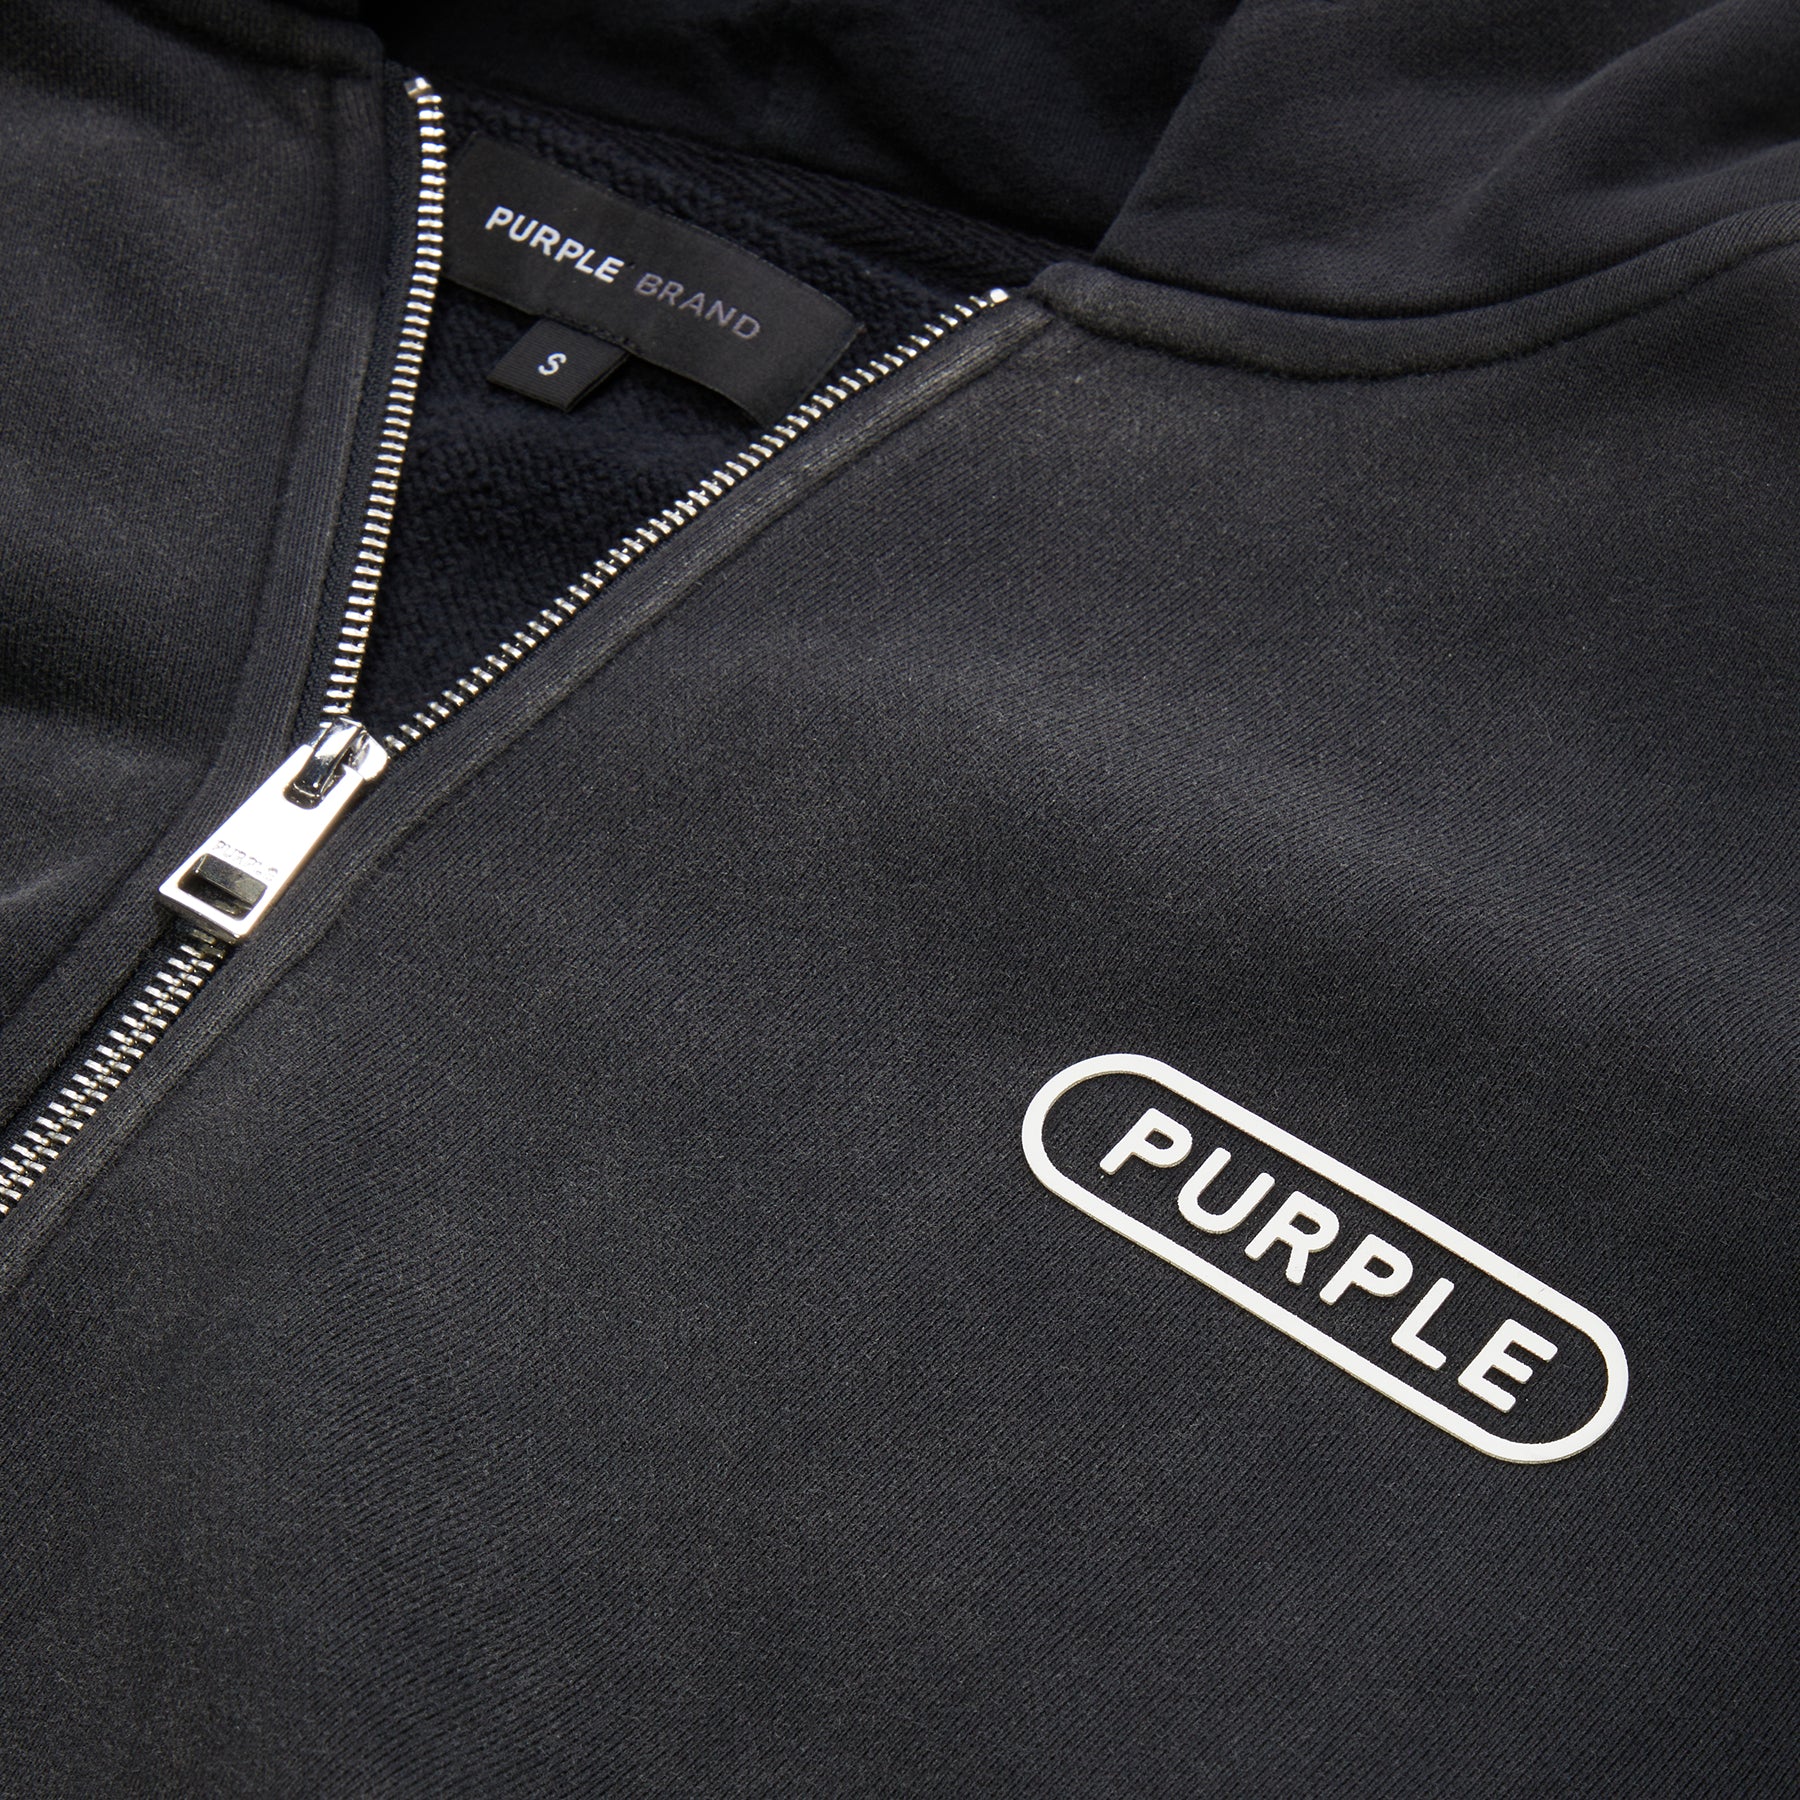 PURPLE Brand HWT Fleece Full Zip Hoody (Black) – CNCPTS